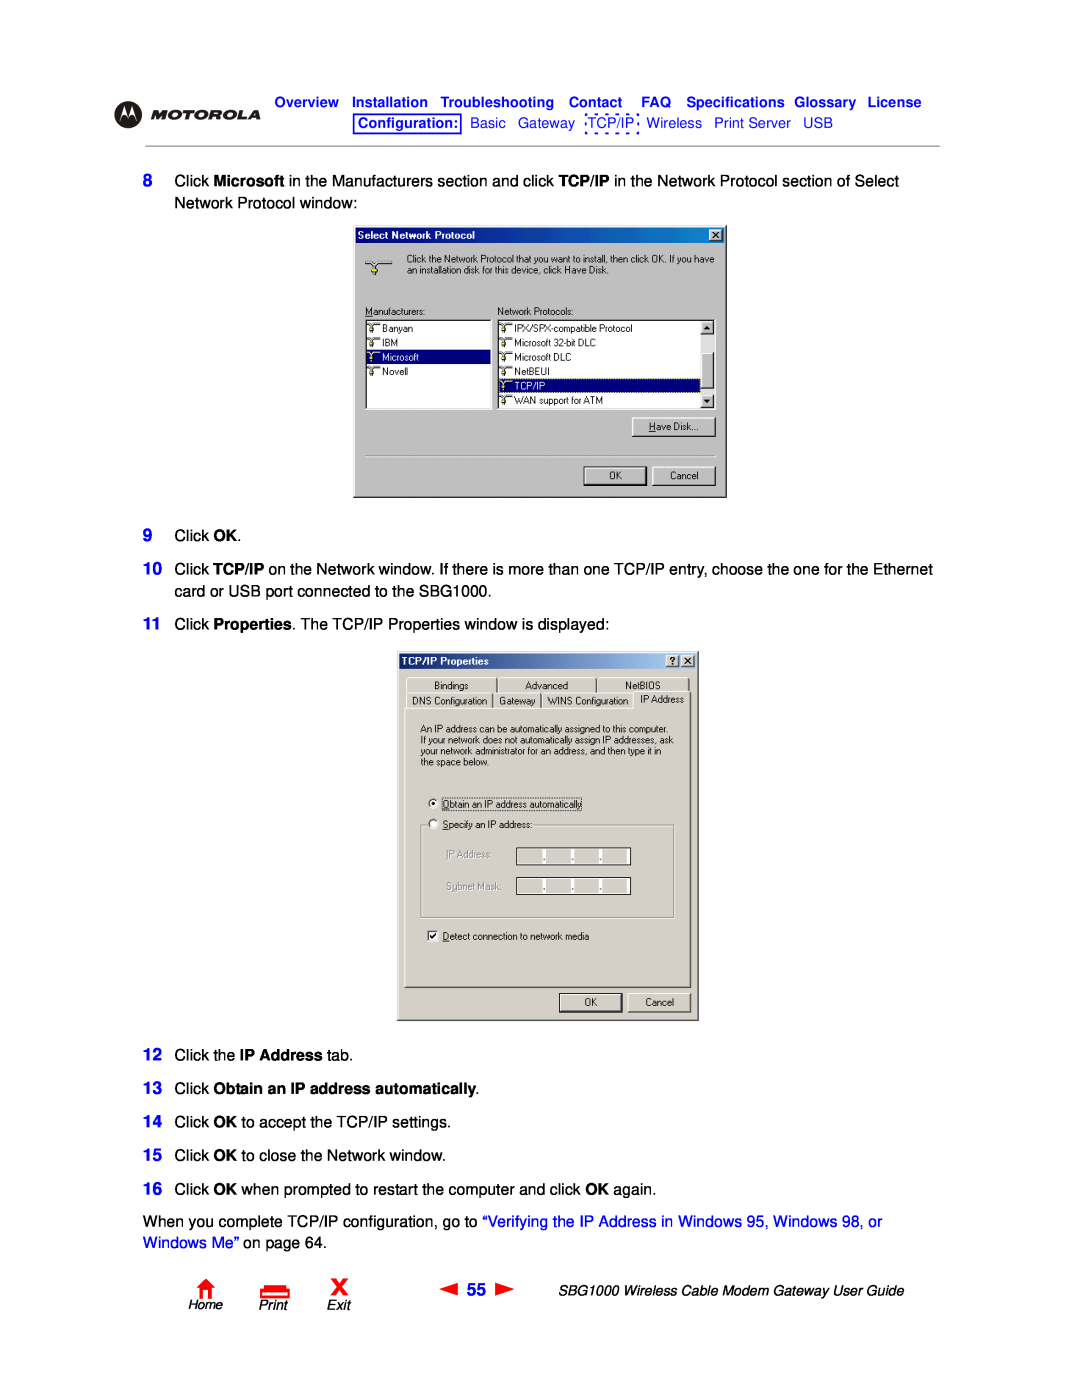 Motorola SBG1000 manual Click Obtain an IP address automatically 